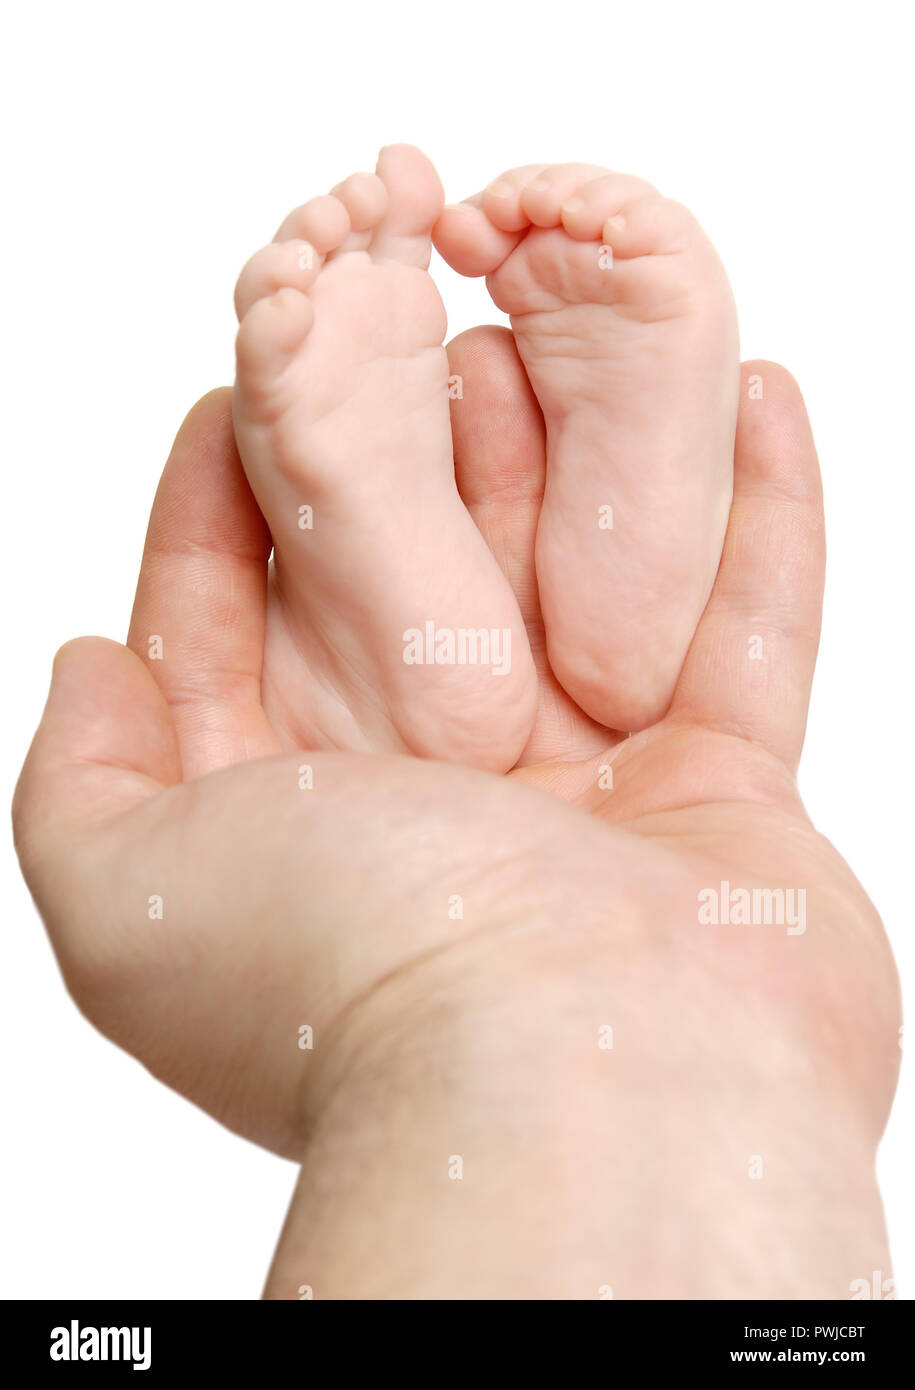 https://c8.alamy.com/comp/PWJCBT/mens-palm-holding-a-small-babys-feet-PWJCBT.jpg